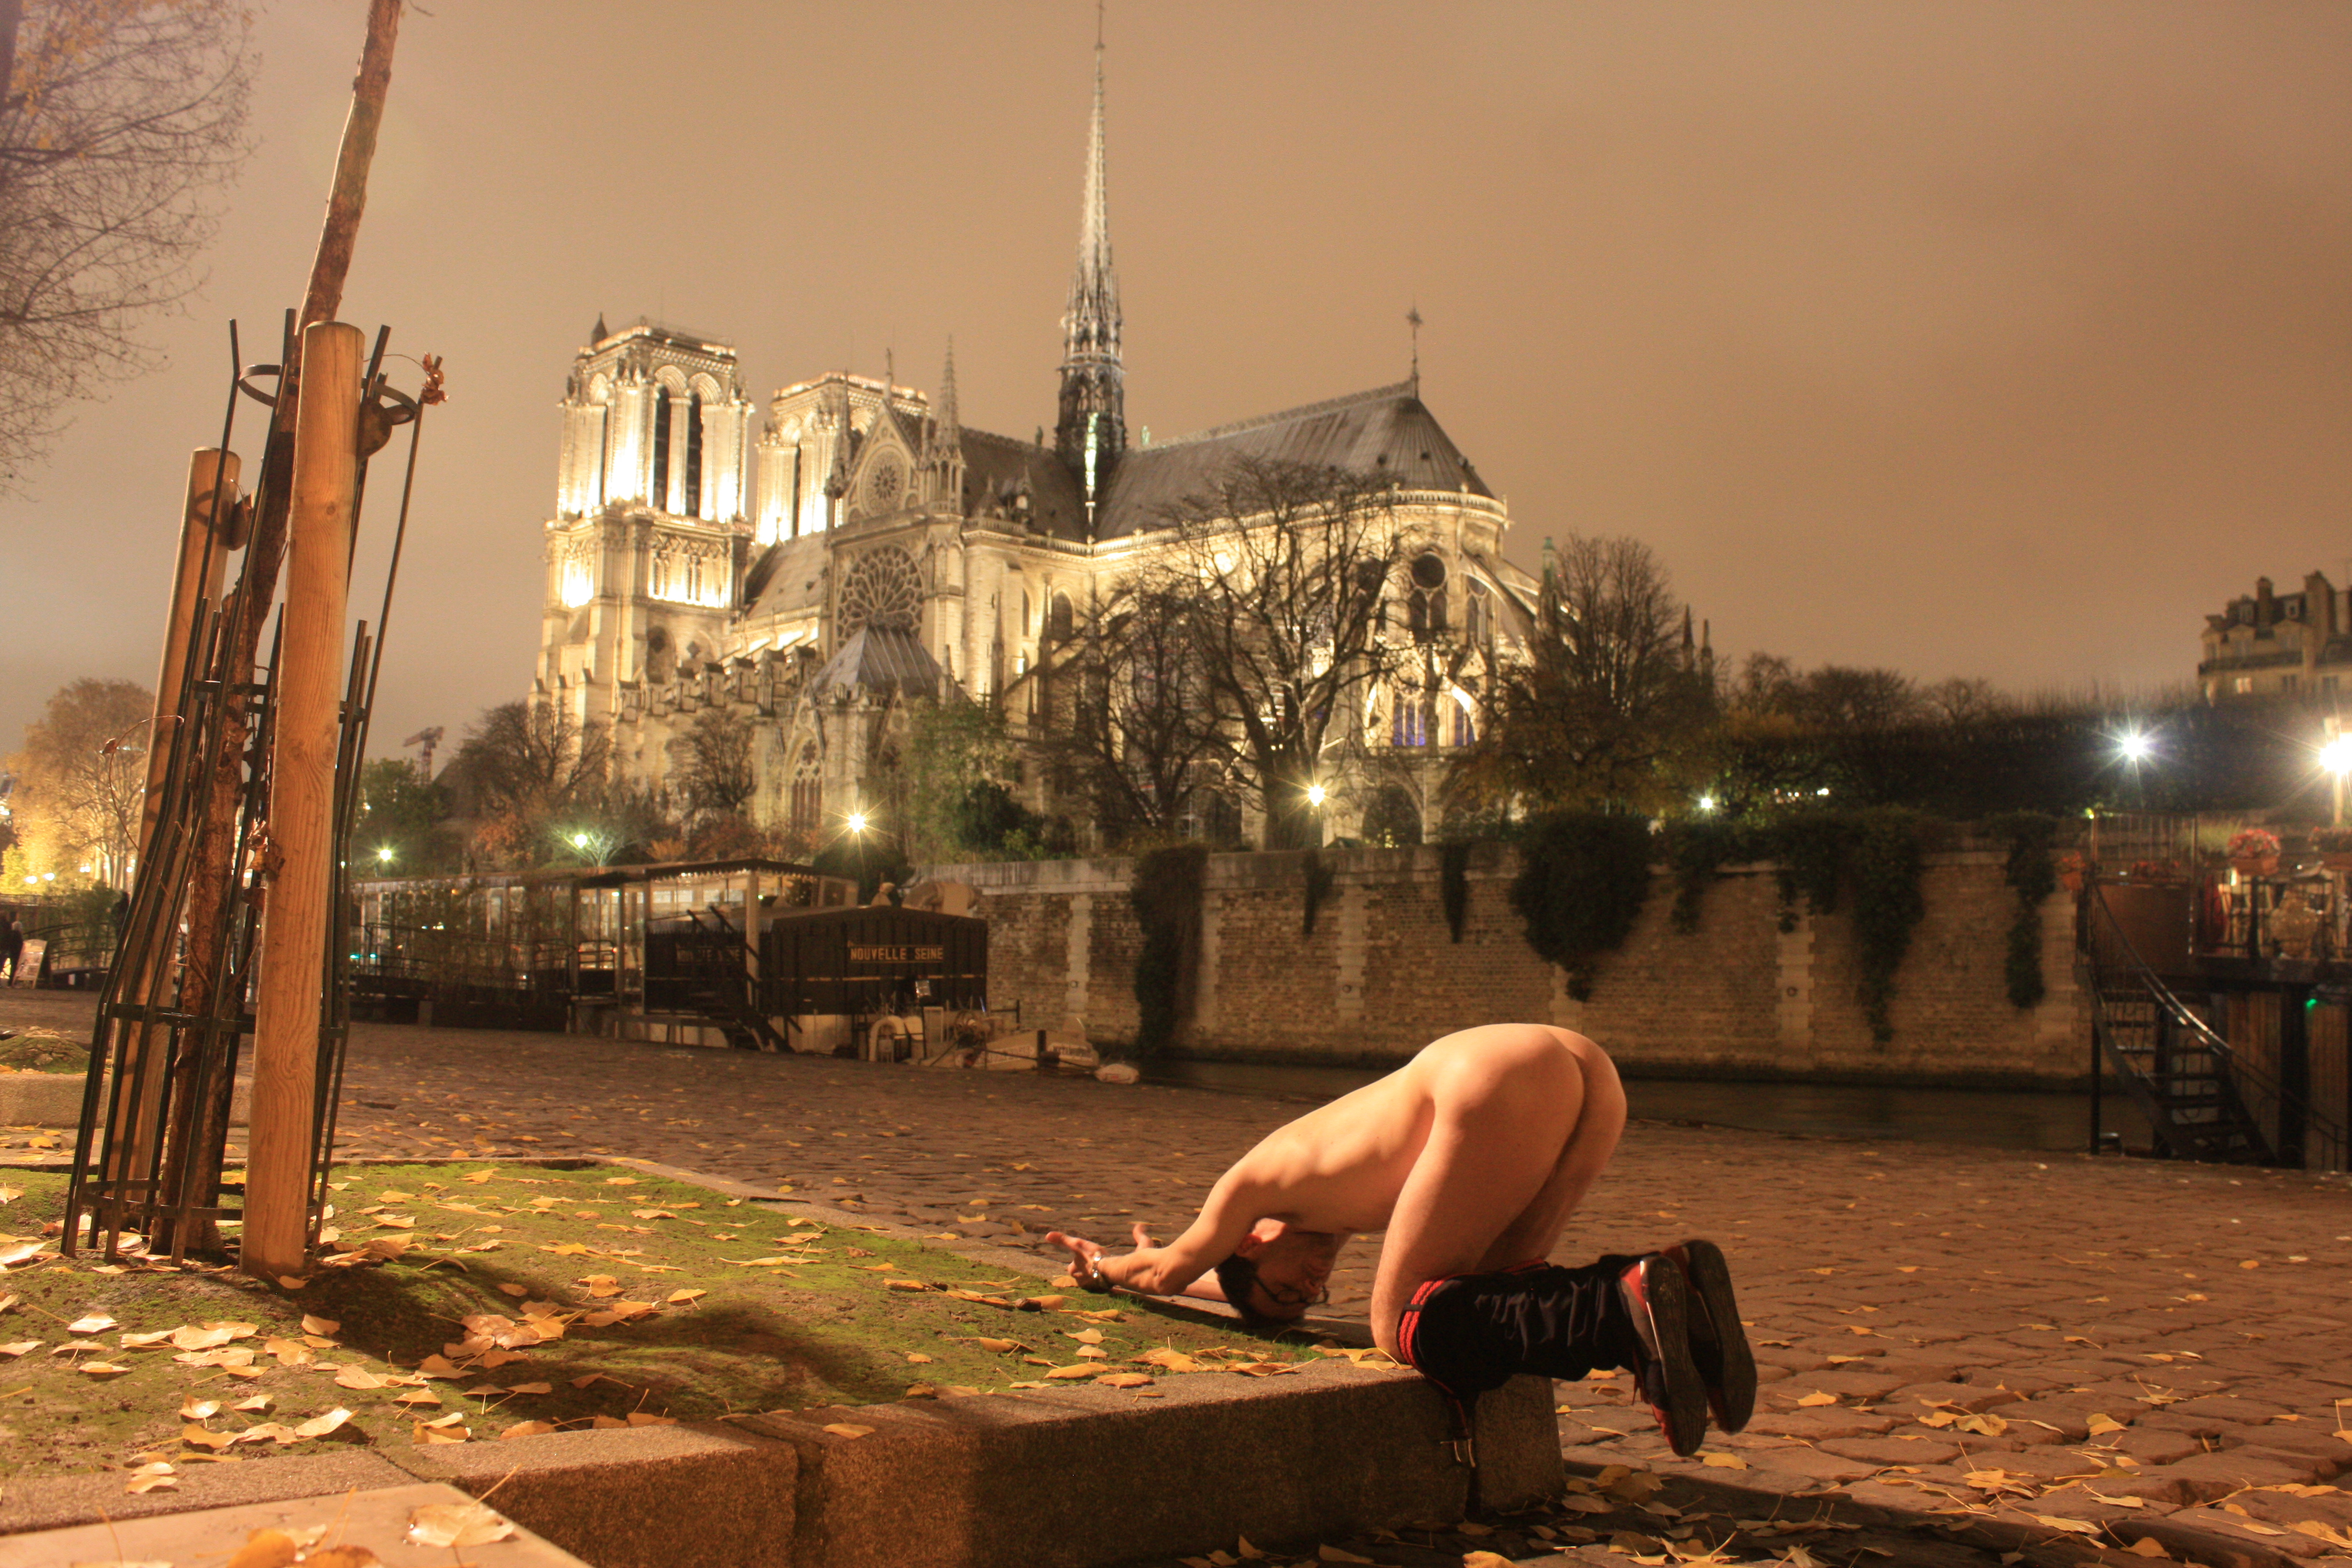 Notre Dame in the back, below the Archevêché's bridge, the bridge where people put a padlock to symbolize their love